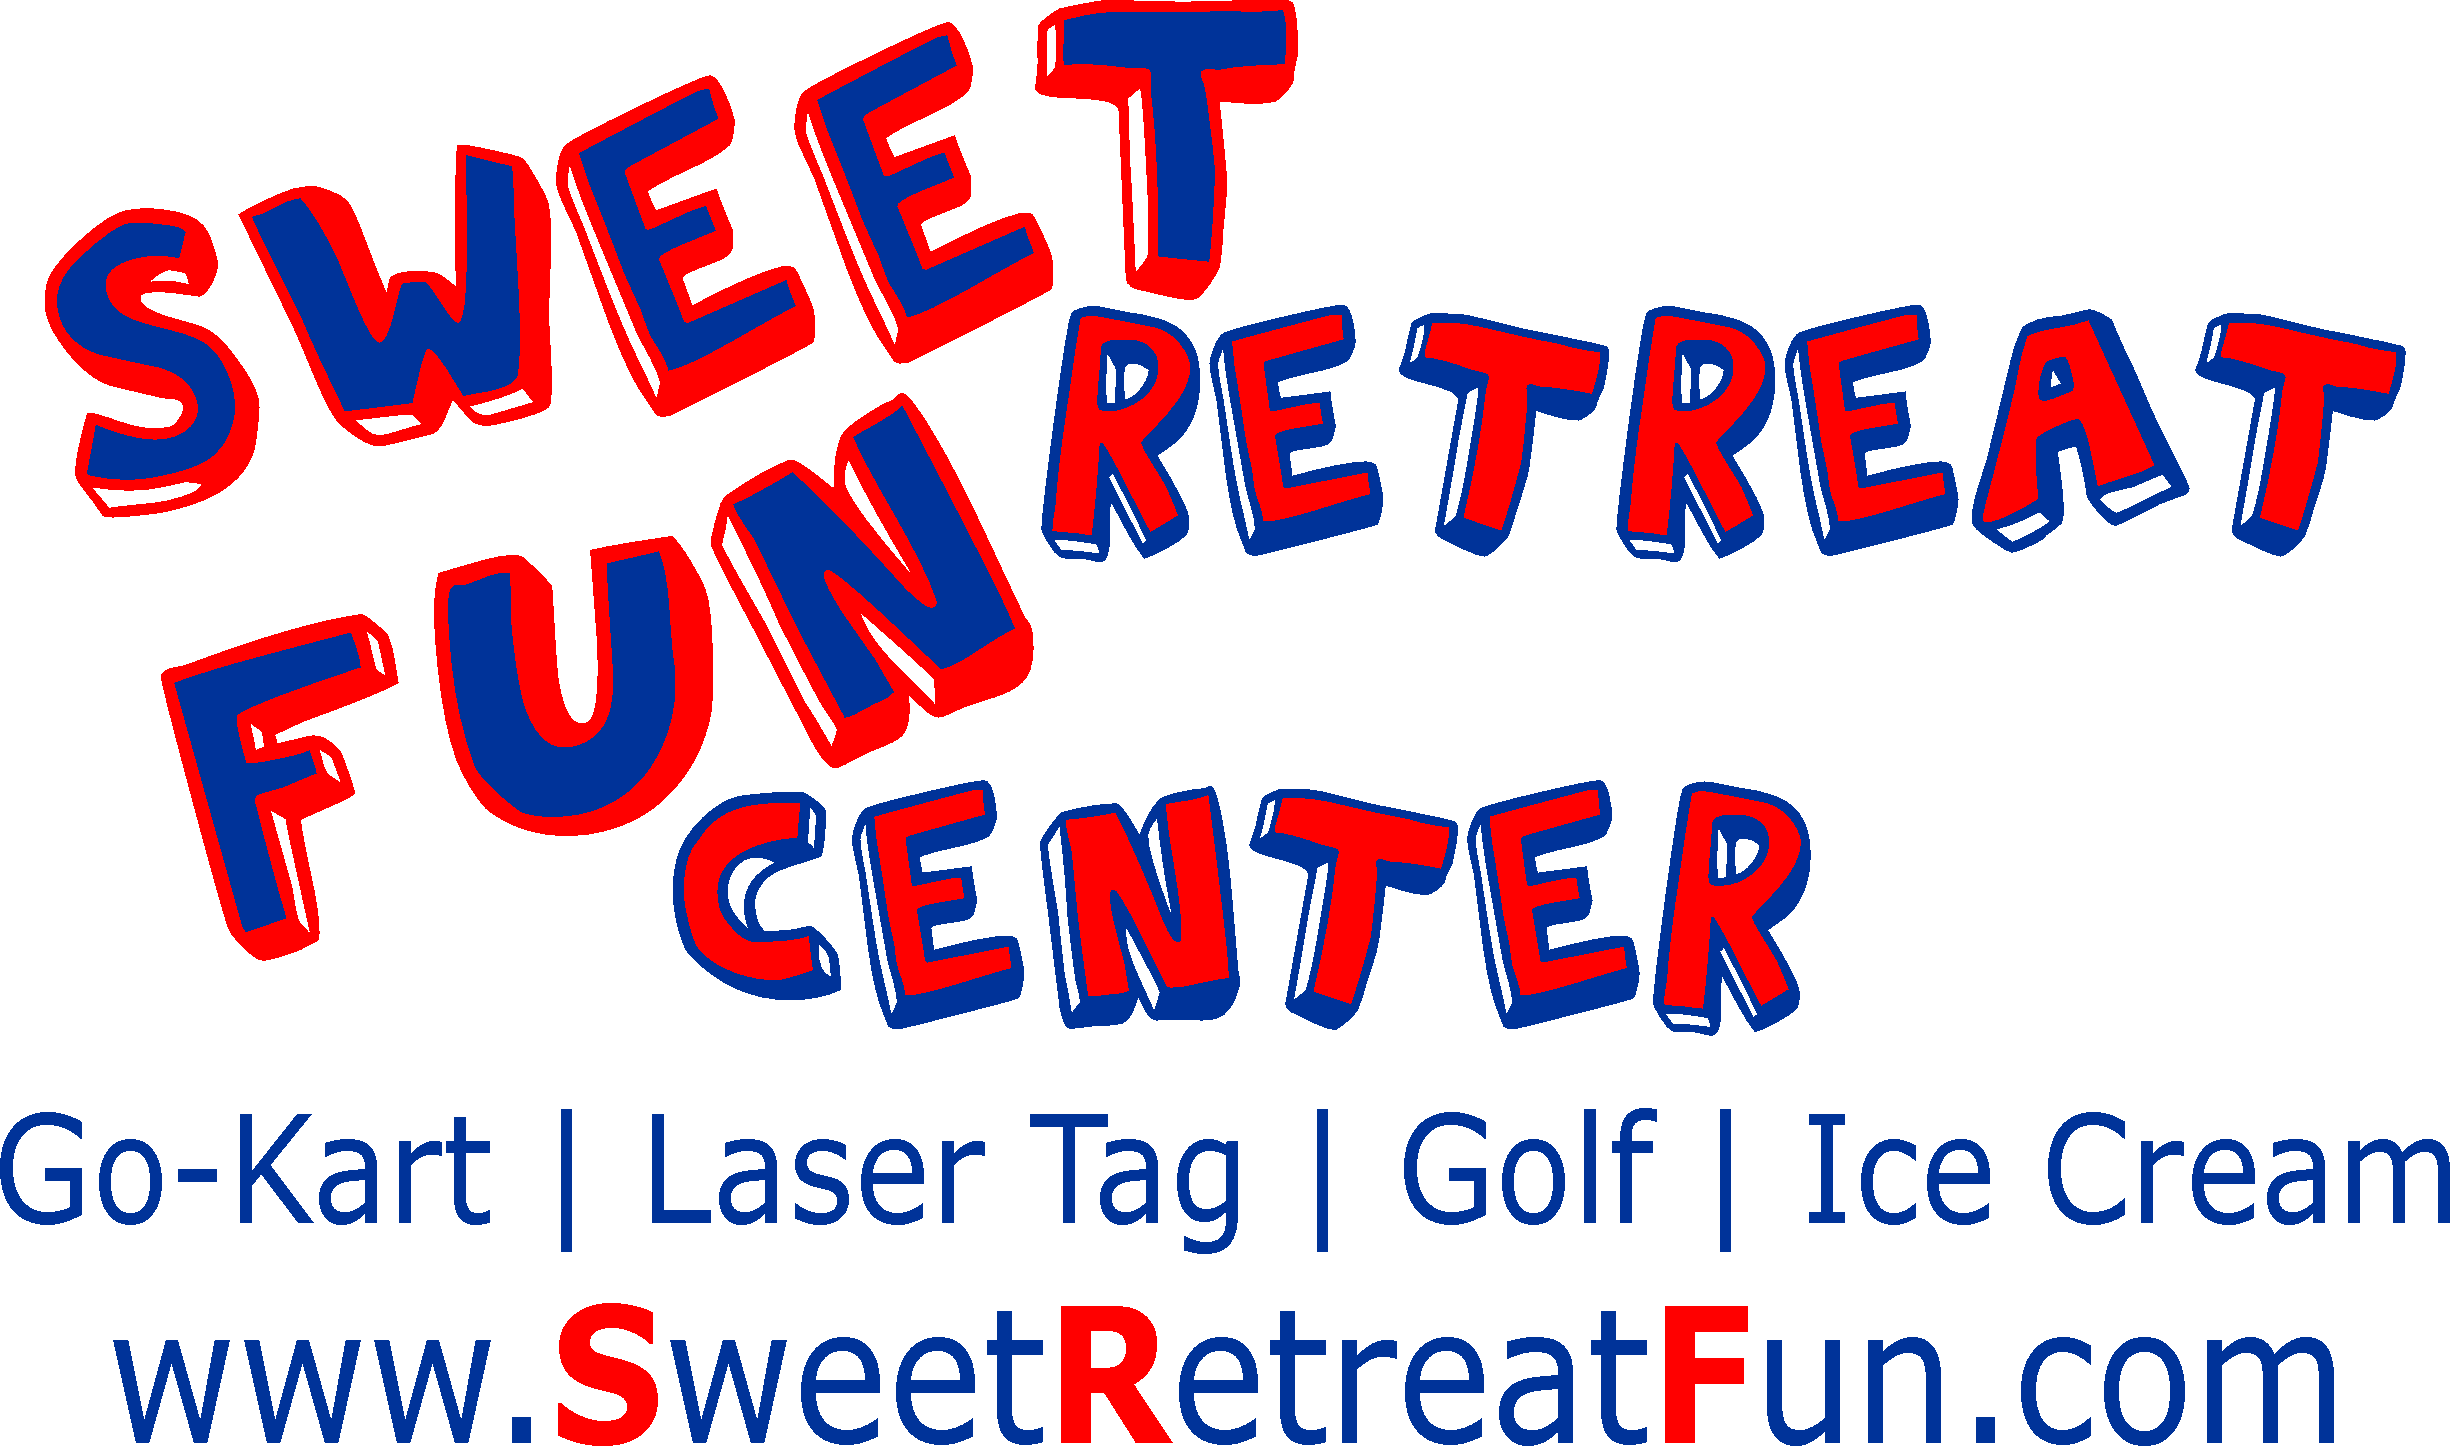 Sweet Retreat Fun Center